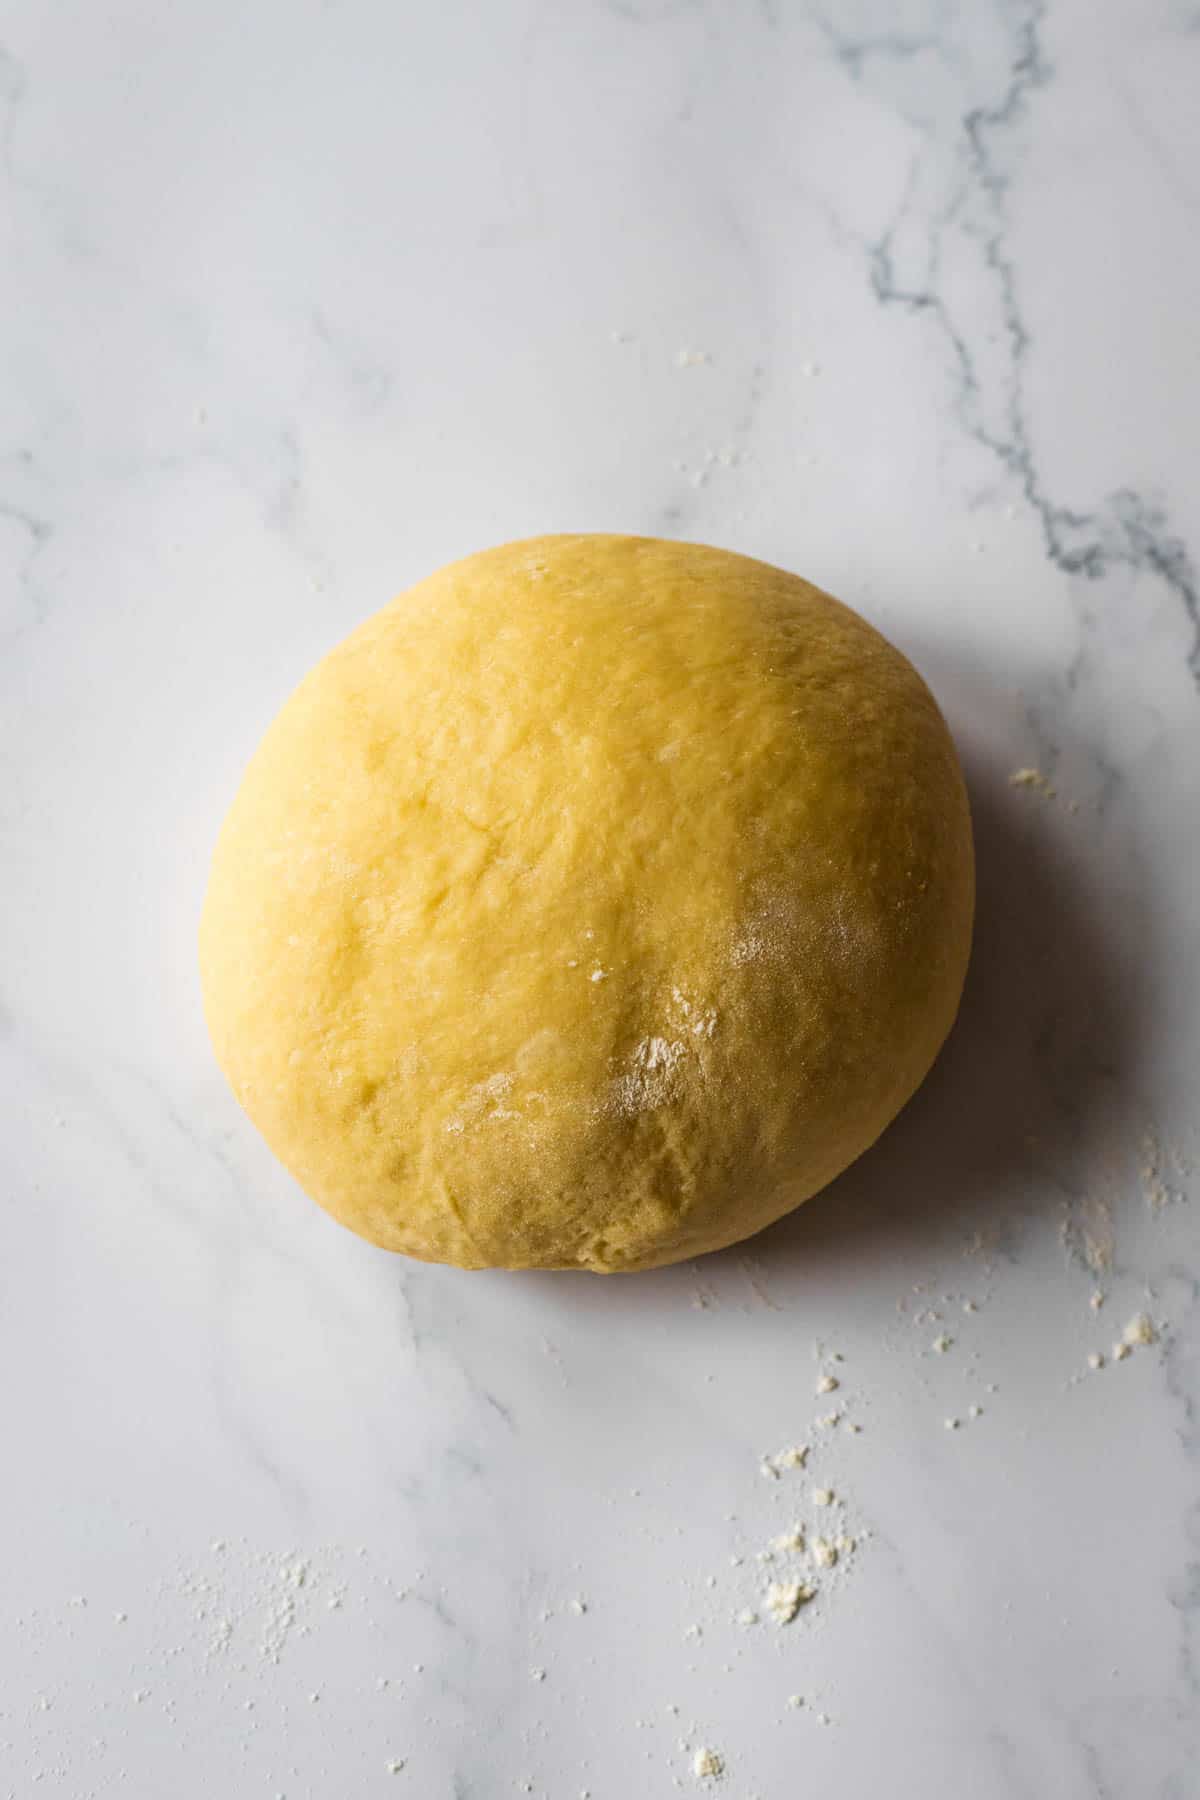 Ball of Portuguese sweet bread dough